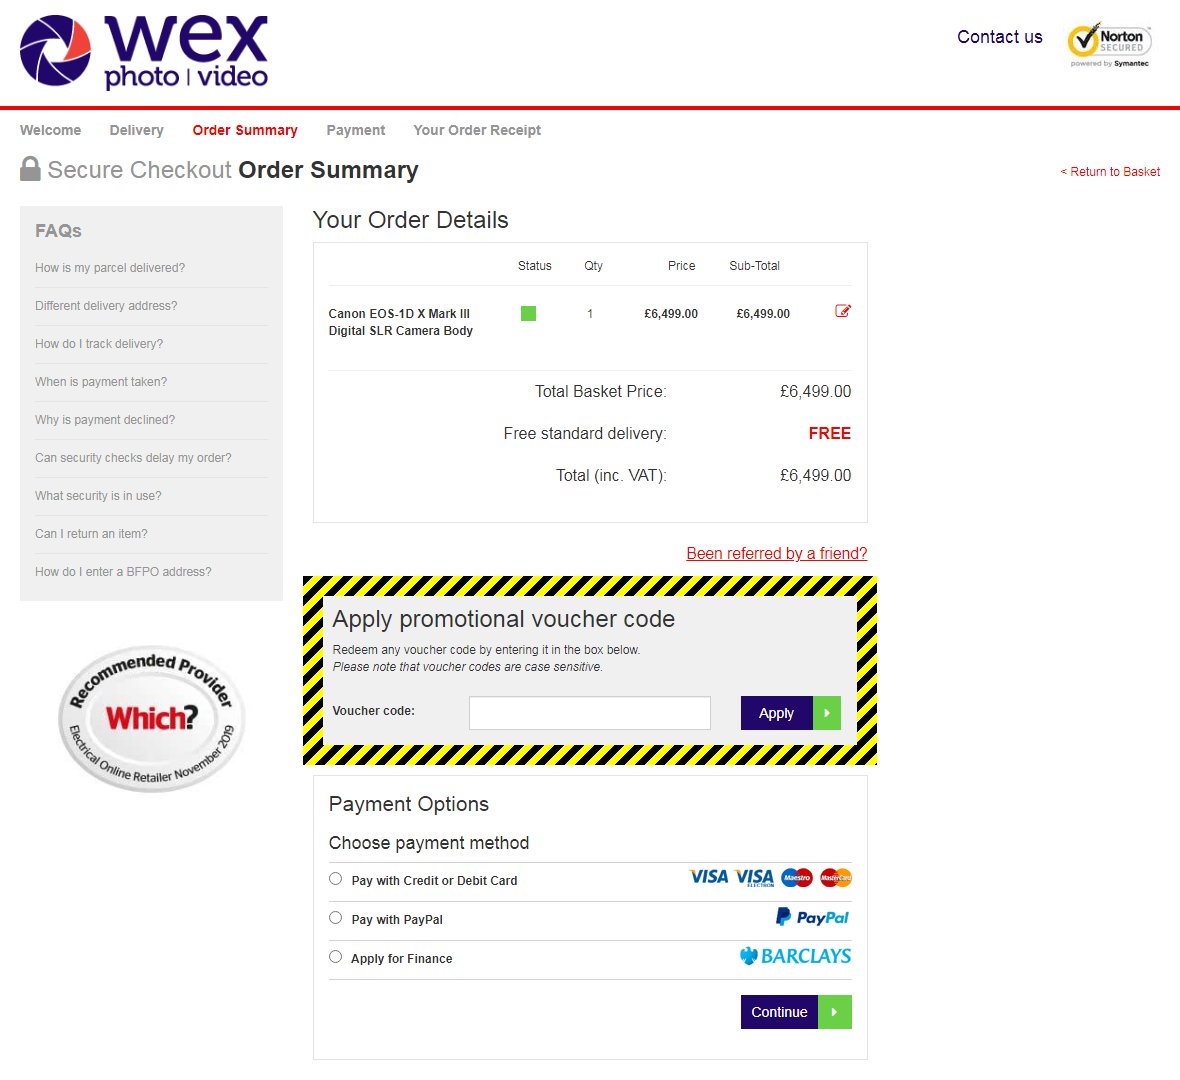 Wex Photo Video Discount Code